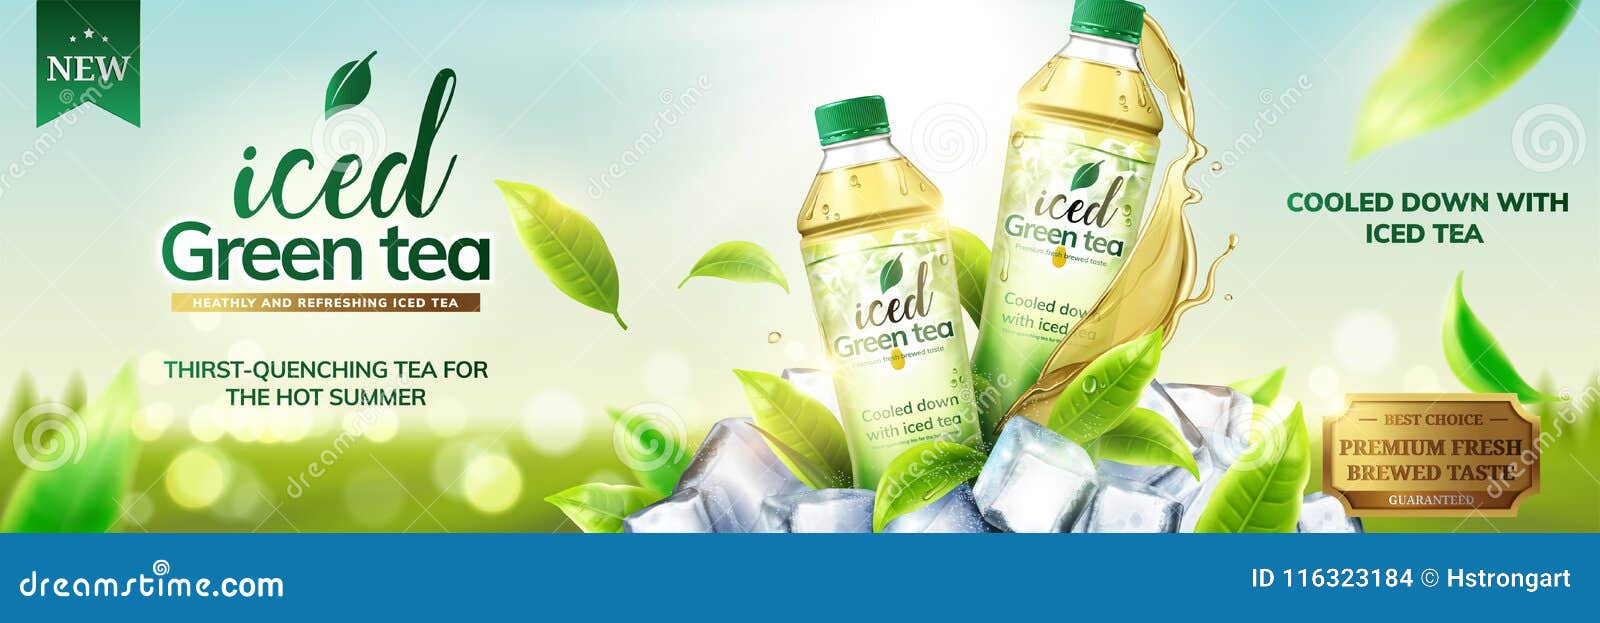 https://thumbs.dreamstime.com/z/iced-green-tea-ads-bottles-ice-cubs-leaves-flying-around-them-d-illustration-bokeh-background-iced-green-tea-ads-116323184.jpg